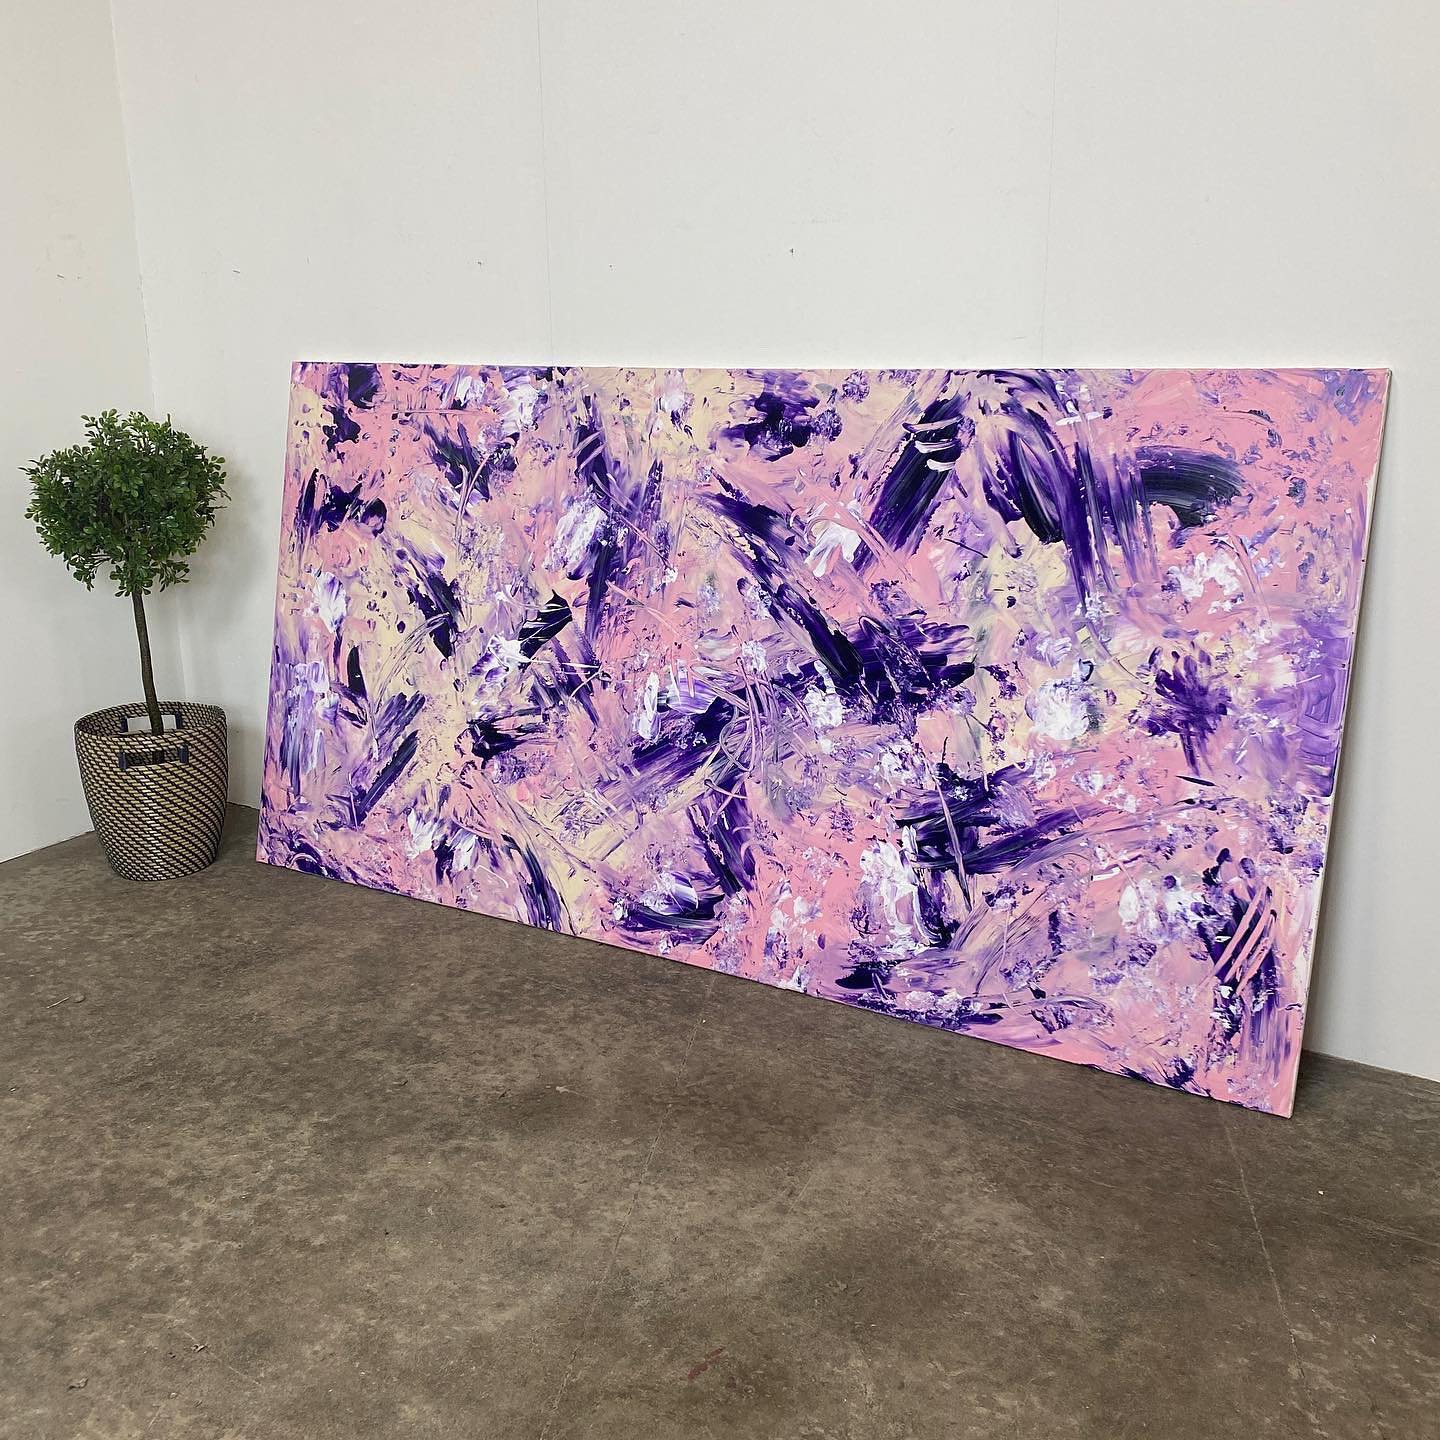 Painting: "Wild Purple" 200 x 100 cm